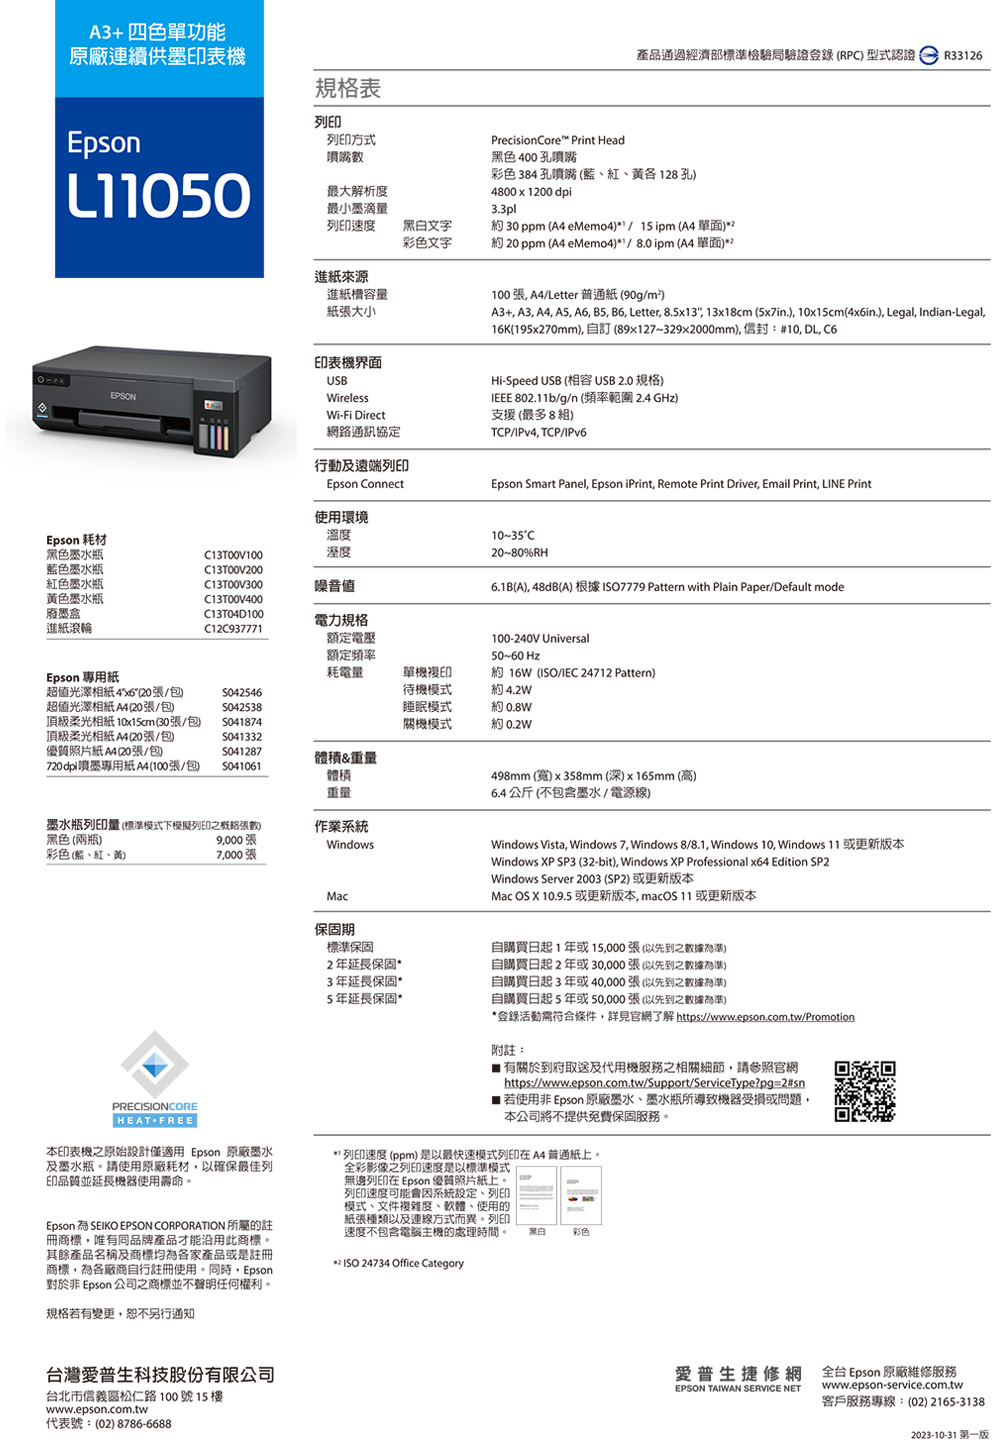 EPSON L11050 A3+單功能連續供墨印表機(Wi-